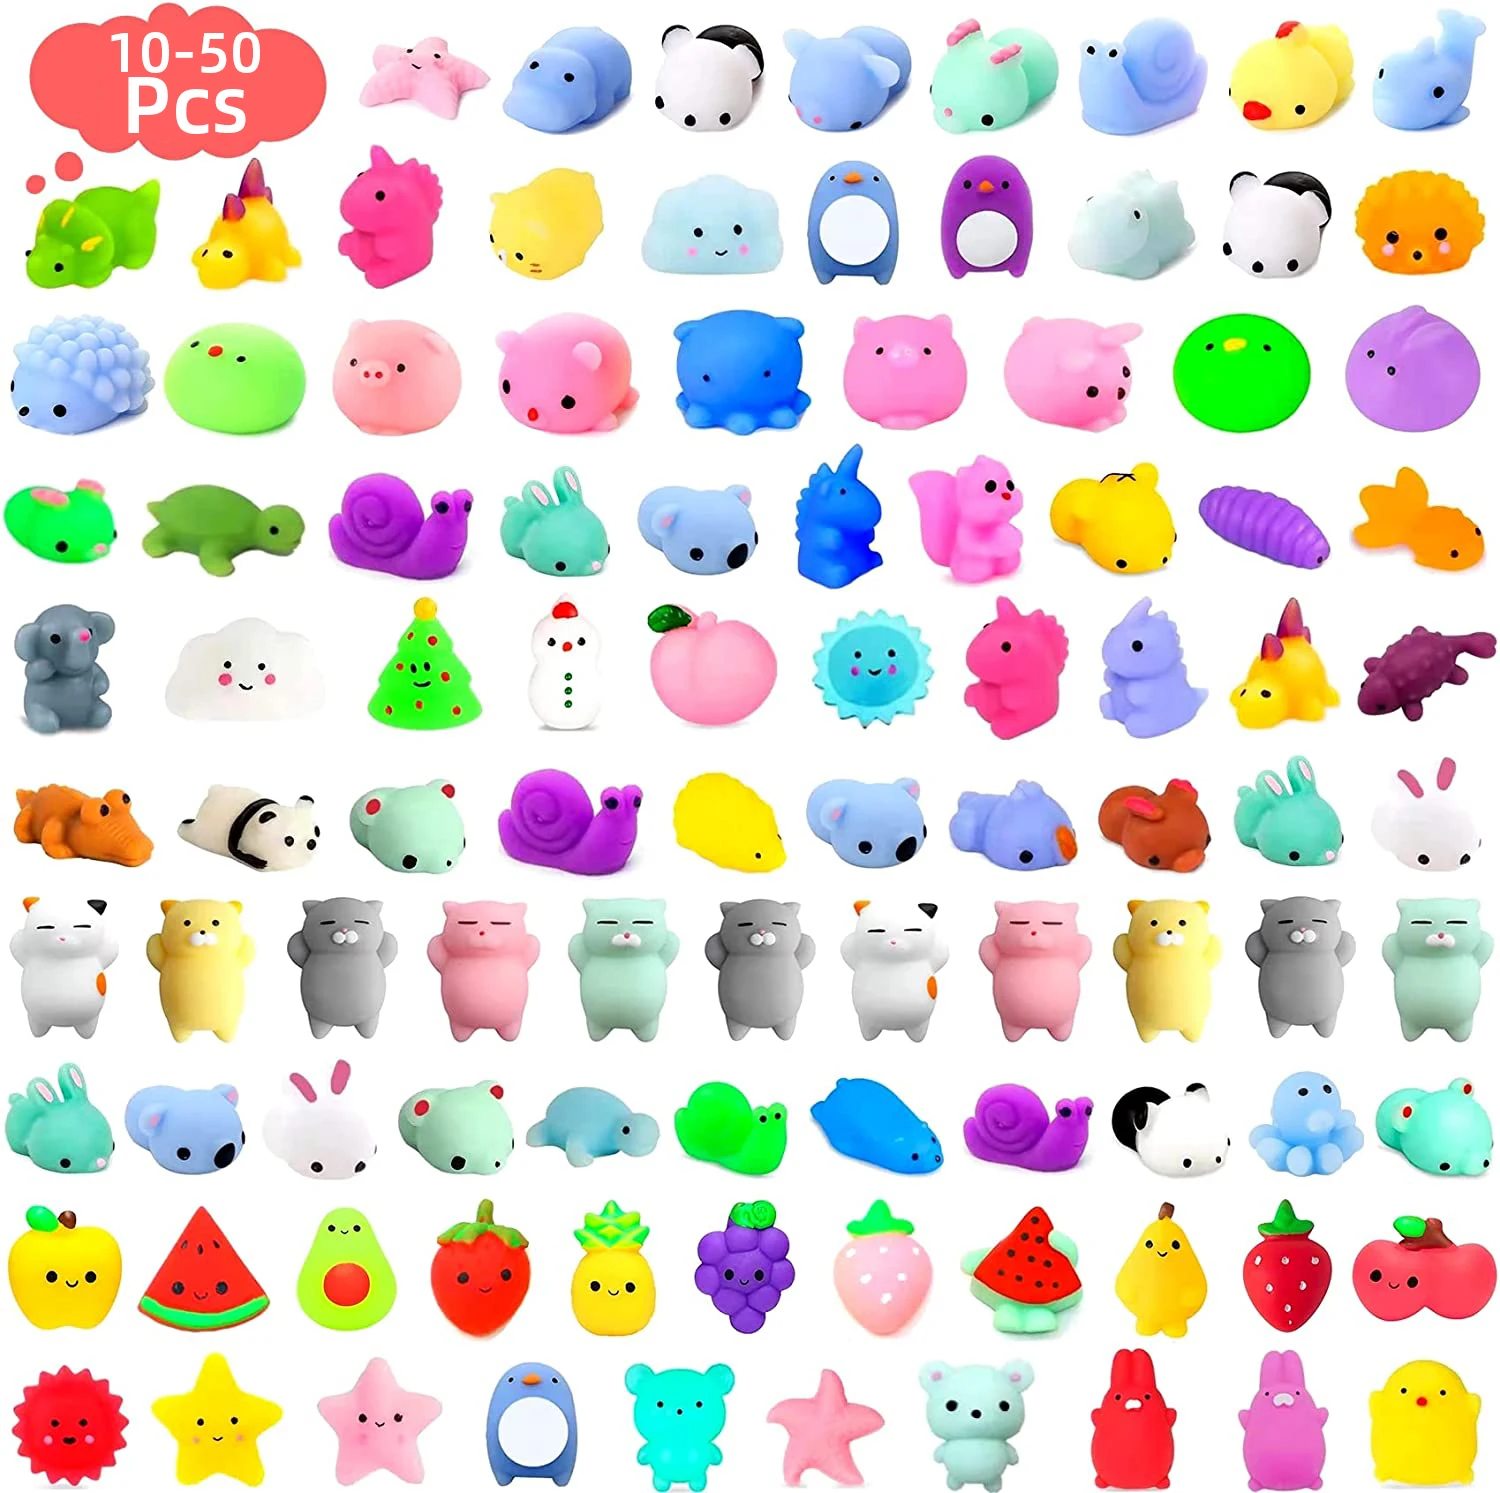 10-50 Pcs Random Squishies Mochi Mini Squishy Kawaii Animal Stress Relief Toys for Boys Girls Birthday Gifts Different Pattern